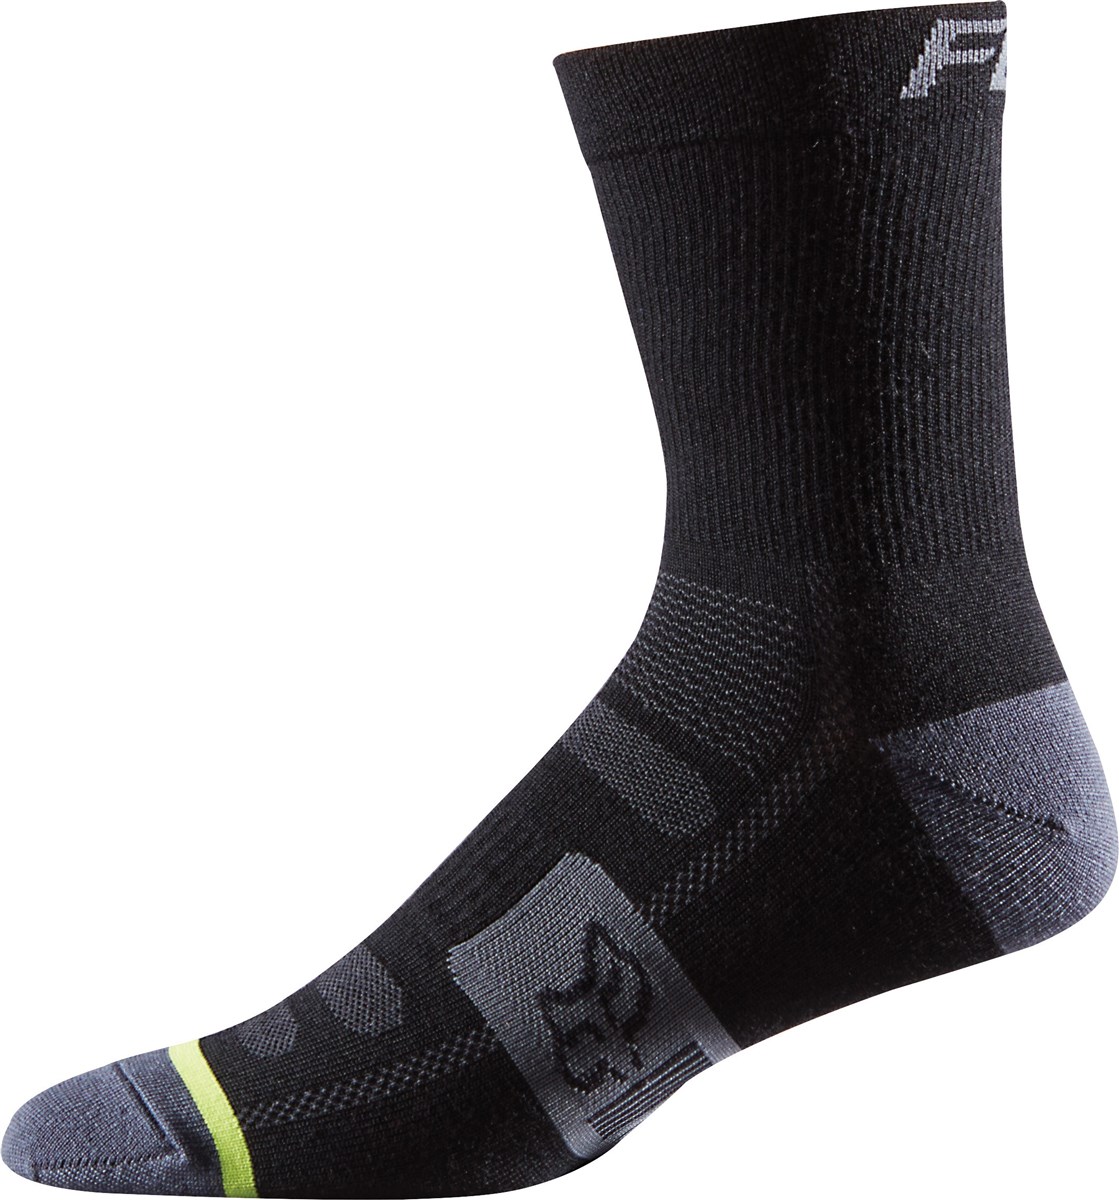 Fox Clothing Merino Wool Cycling Socks 6 Inch AW16 product image